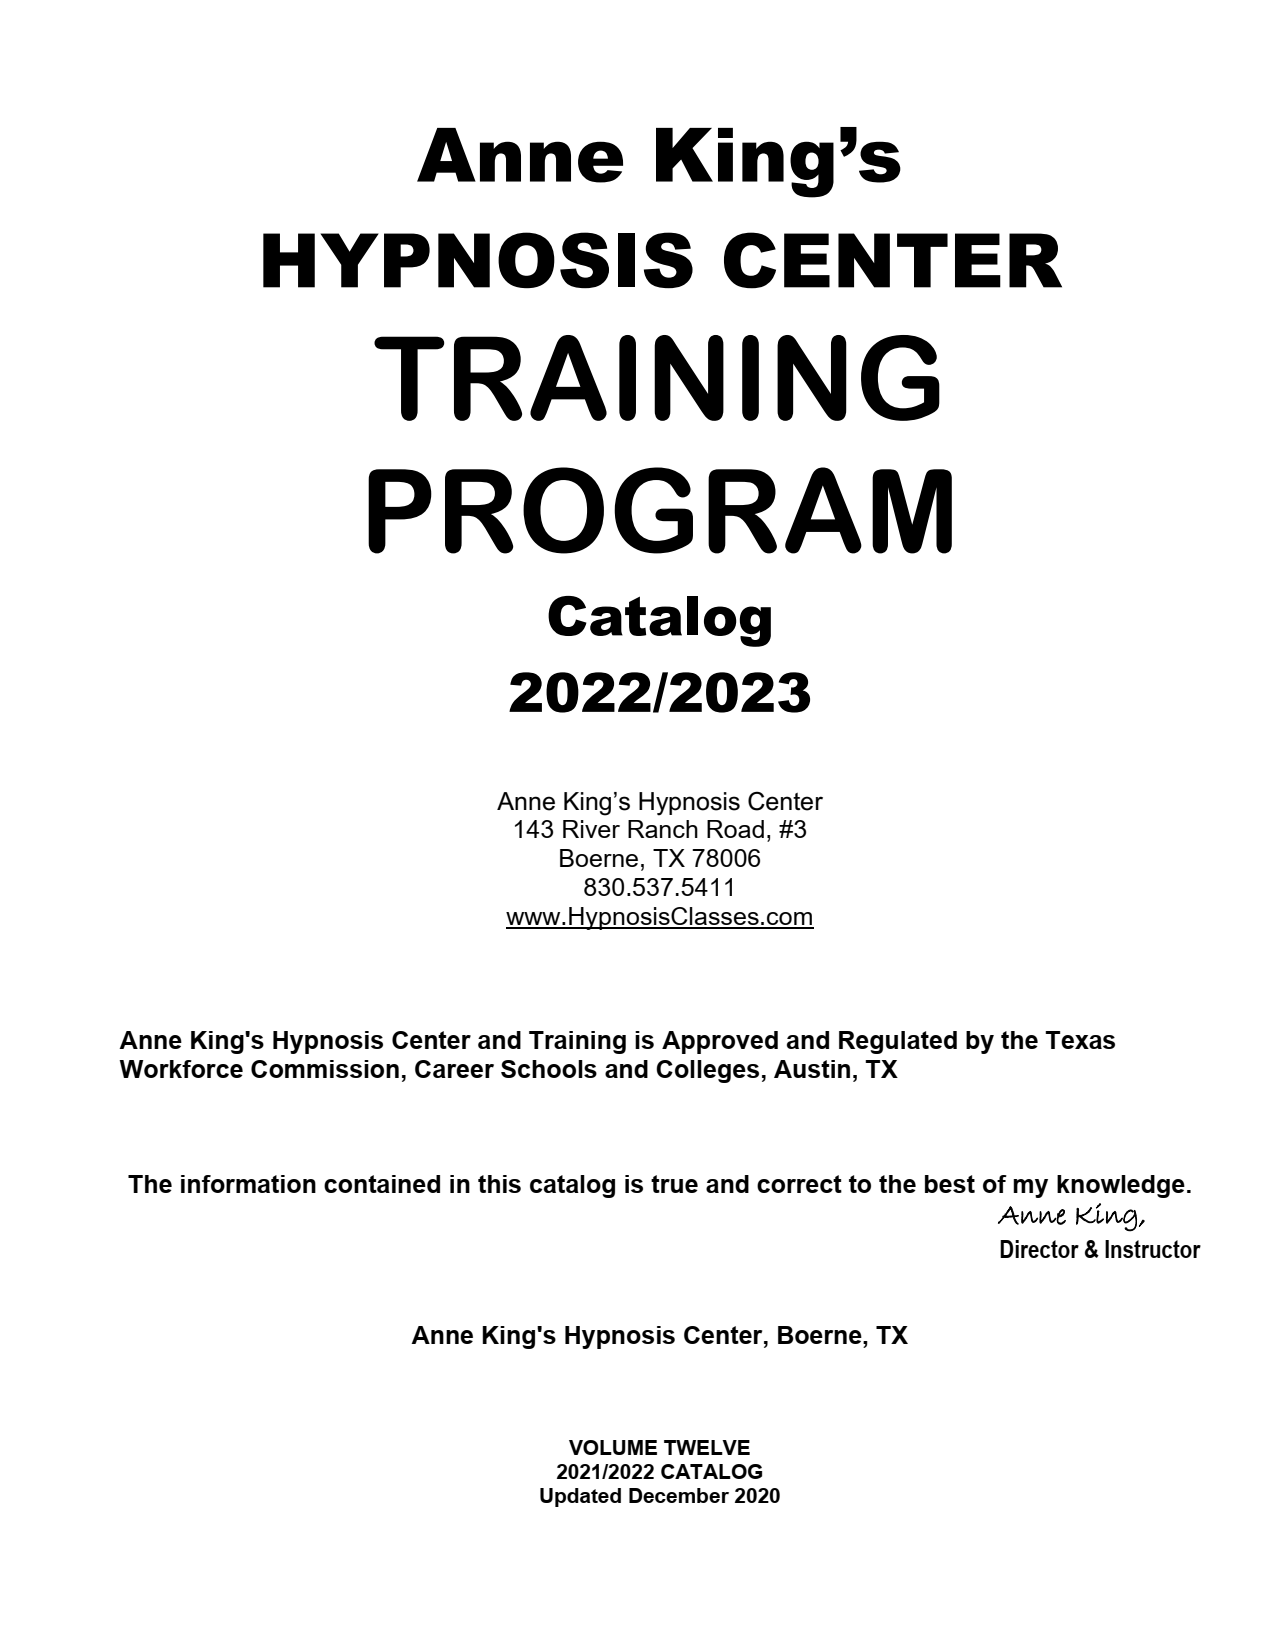 Ann King Hypnosis Course Catalog